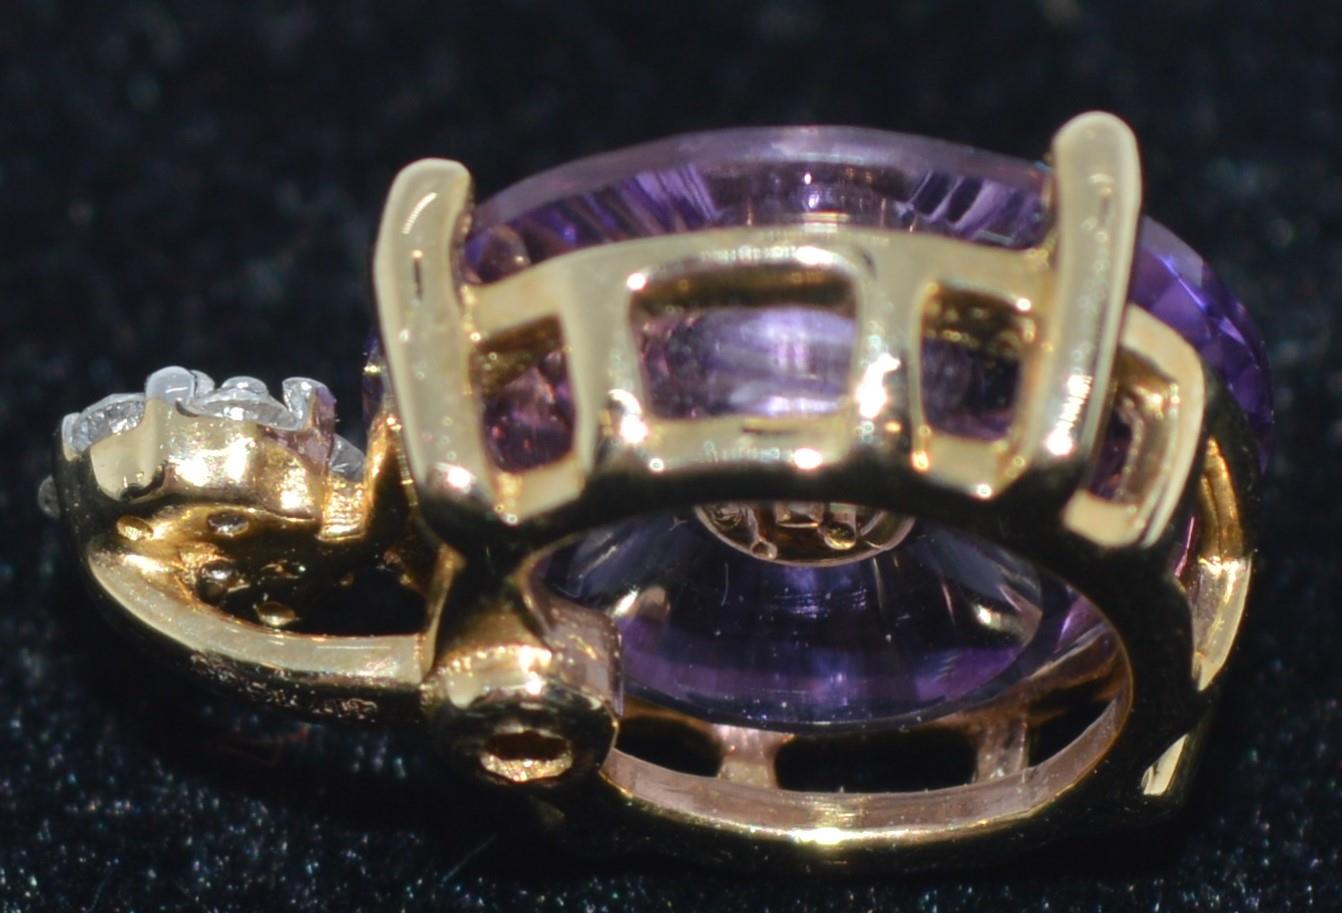 X2 amethyst gem stones pendants set in gold mounts marked 417 TGGC - Image 6 of 6